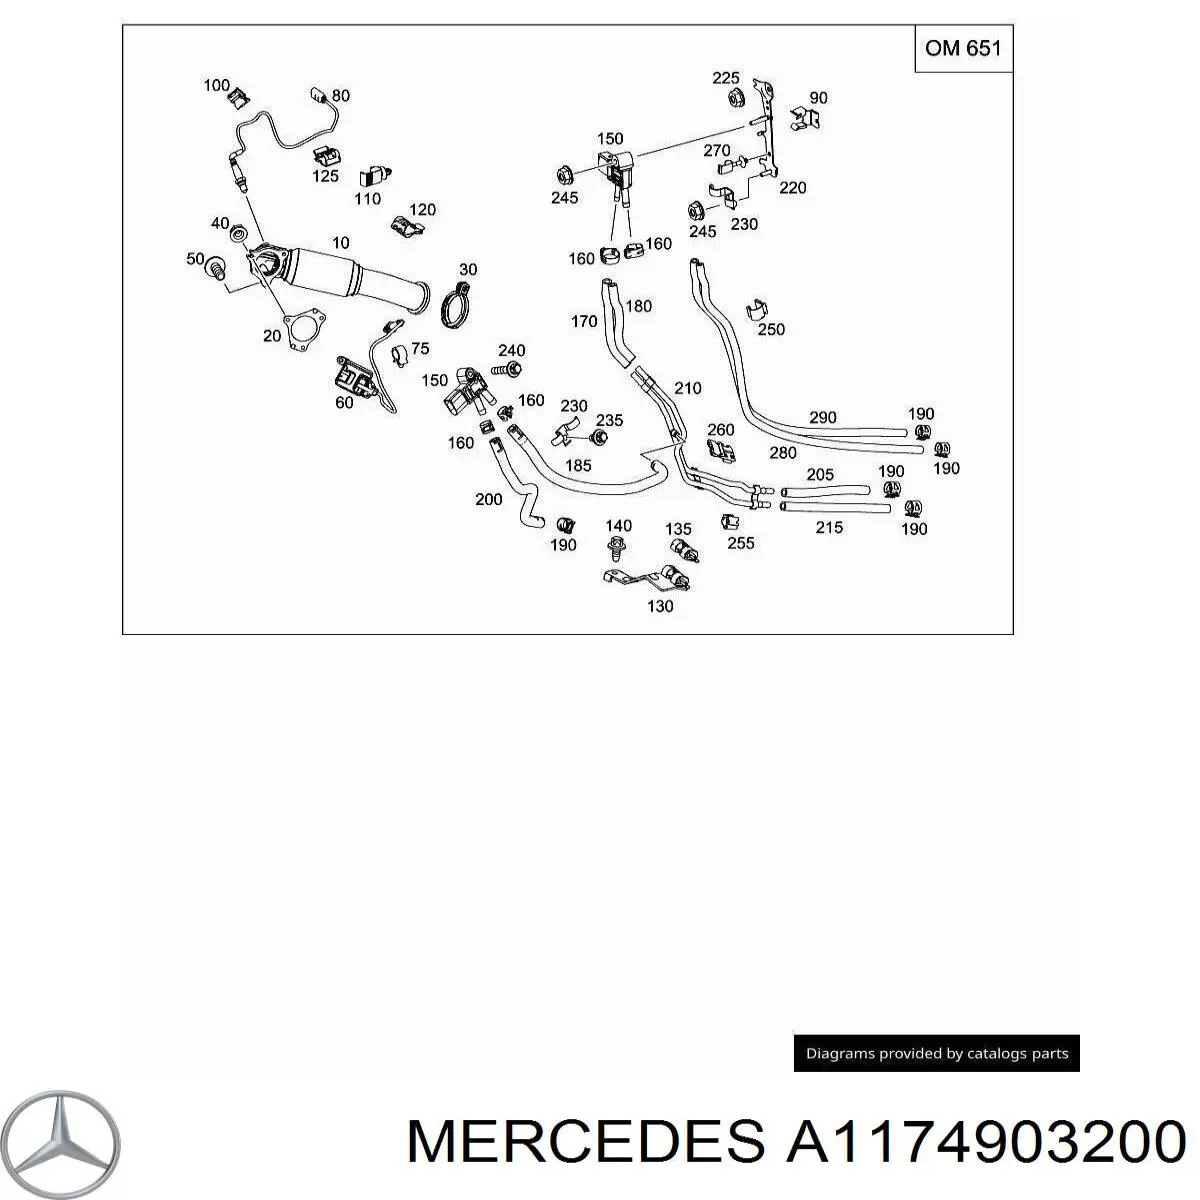 A1174903200 Mercedes